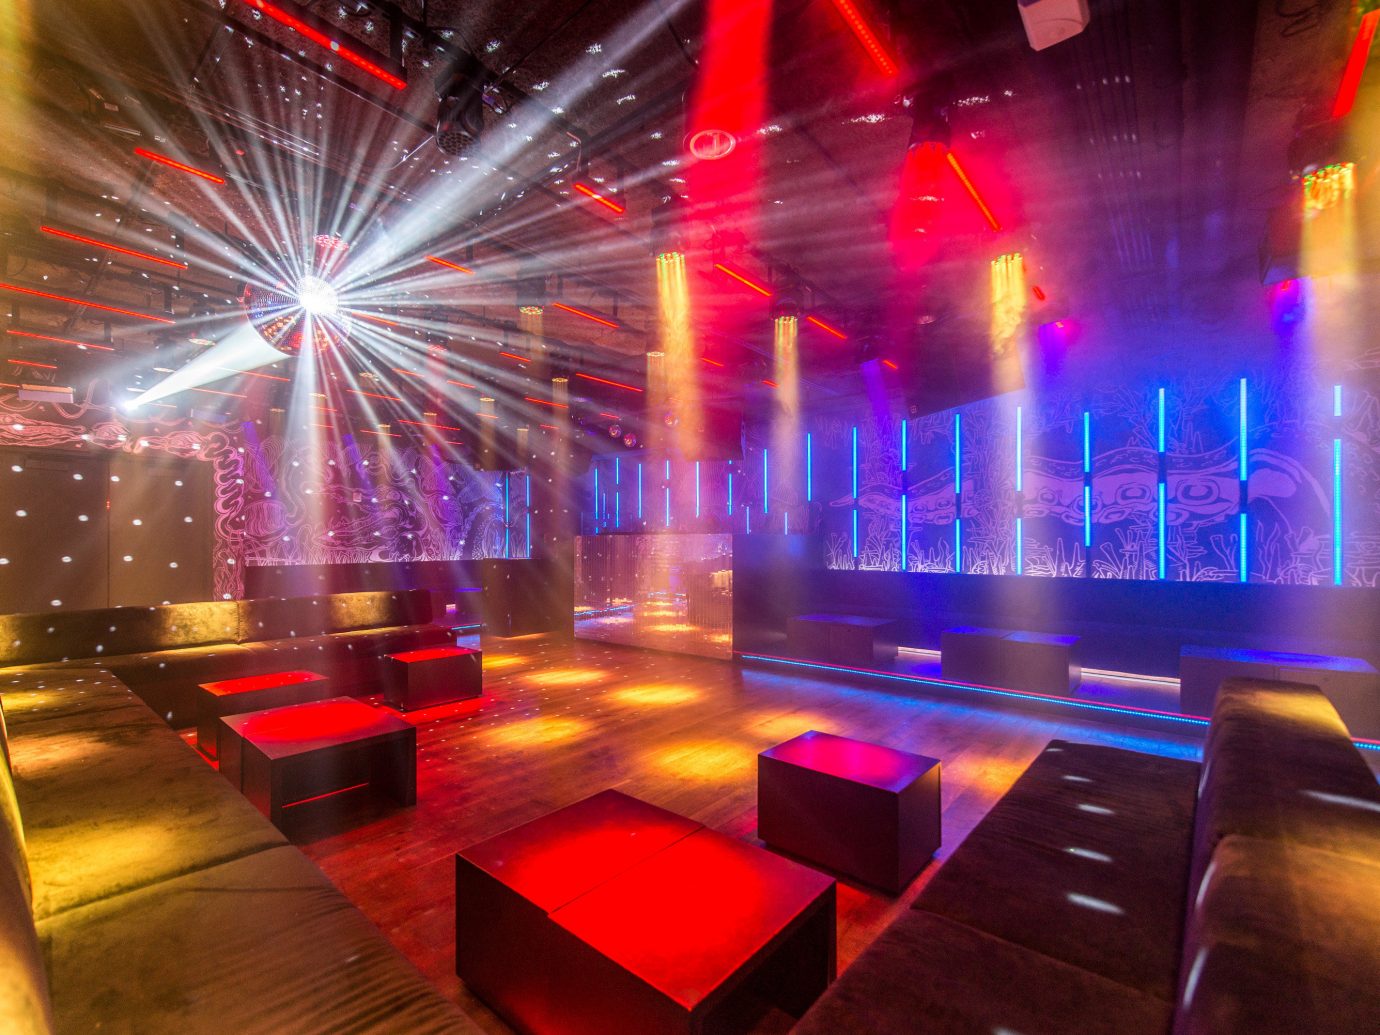 Food + Drink floor indoor nightclub disco stage light music venue function hall musical theatre laser blur